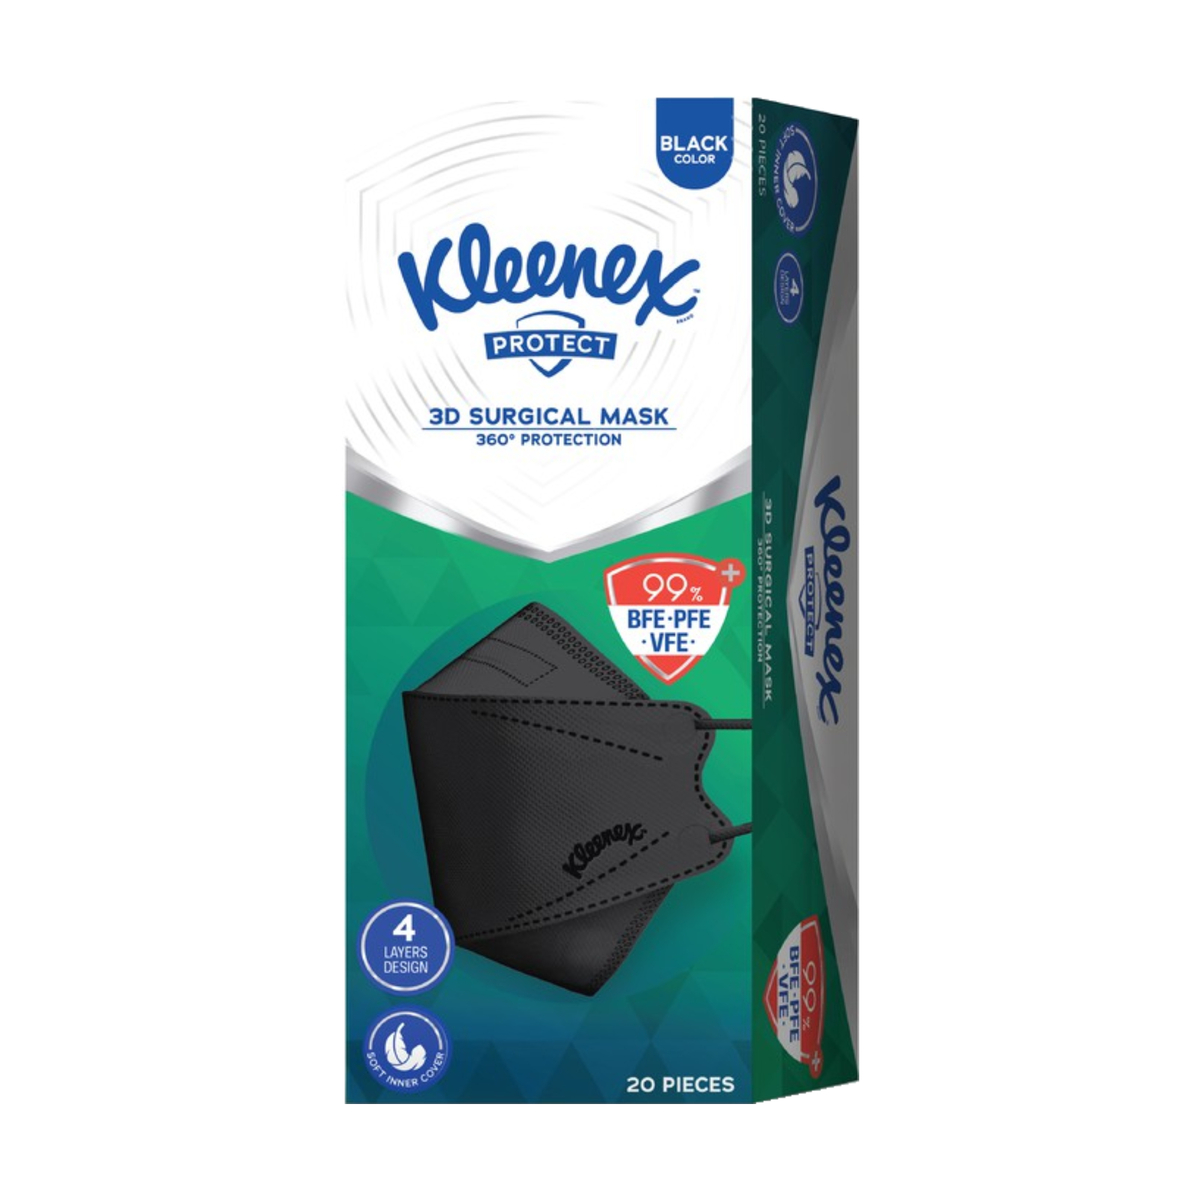 Kleenex Protect Mask 3D 20pcs